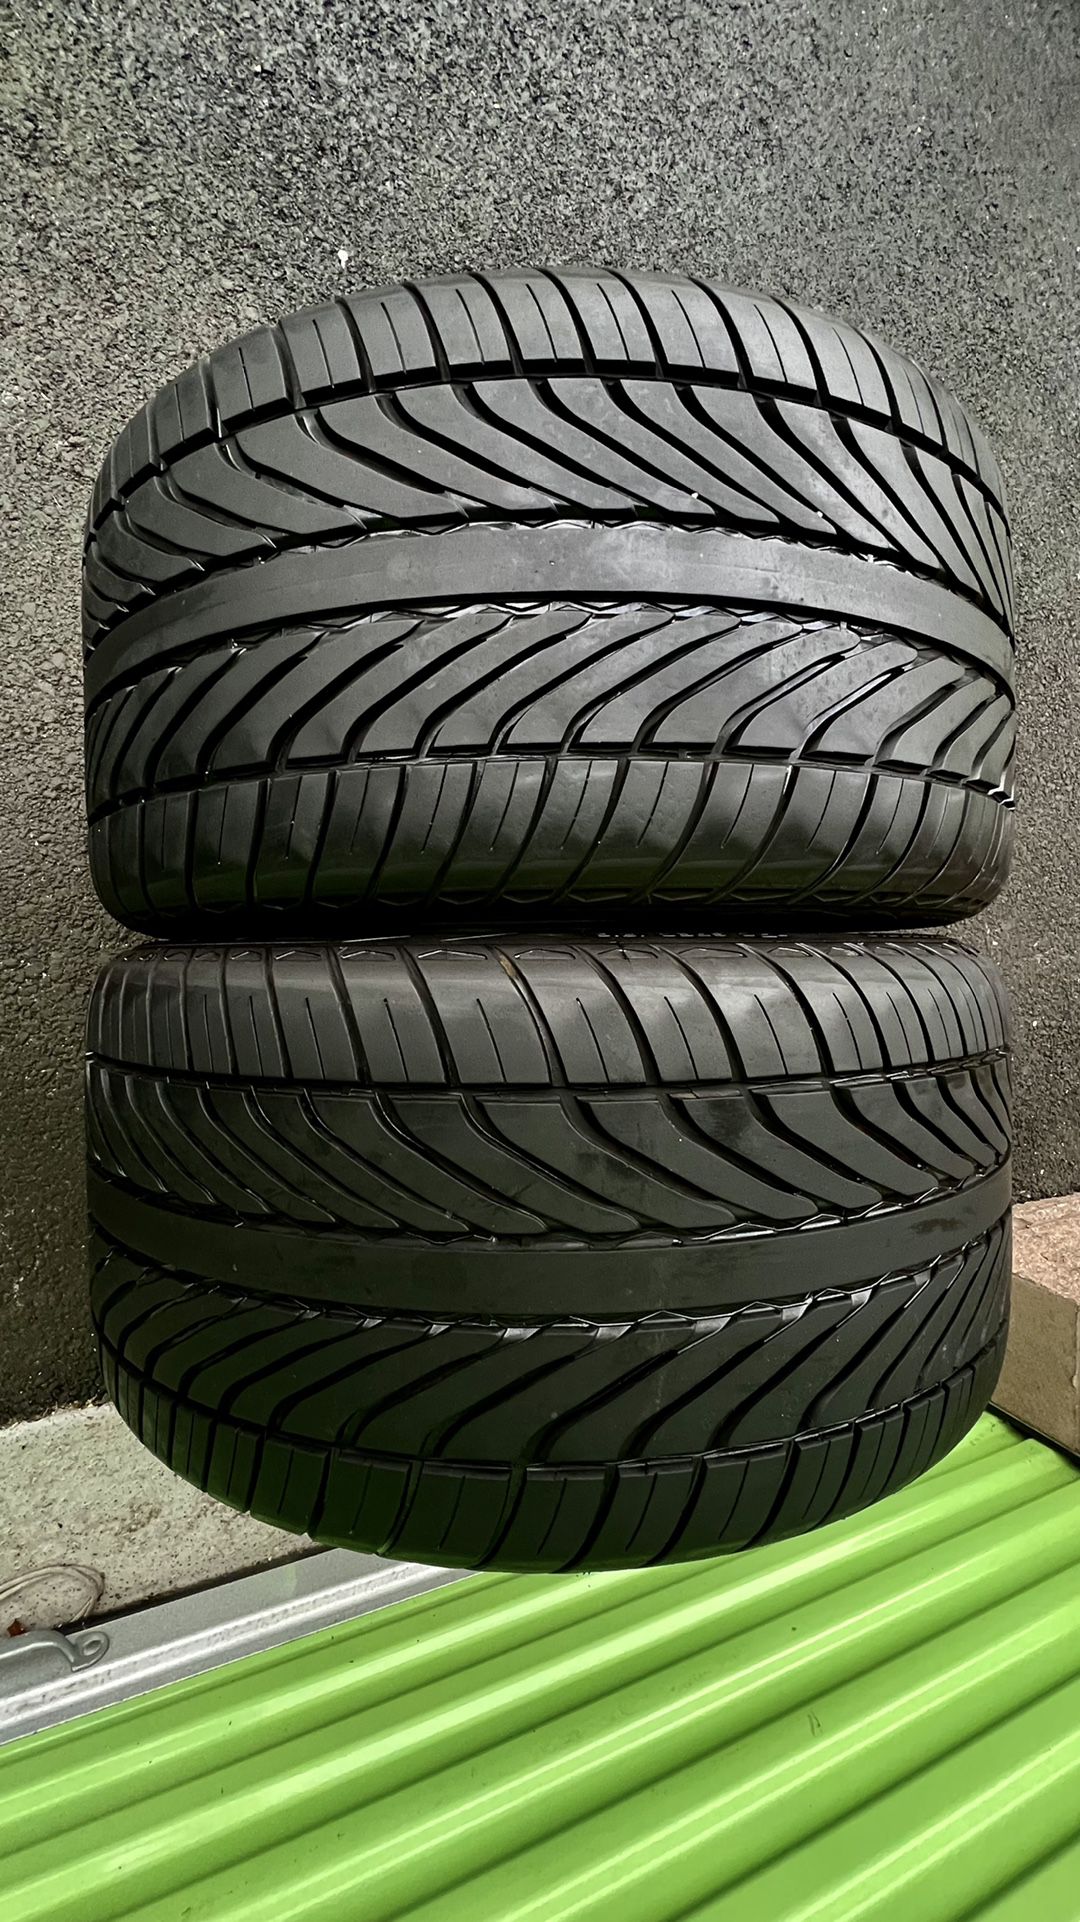 285/35/19 Goodyear F1  2 Tires